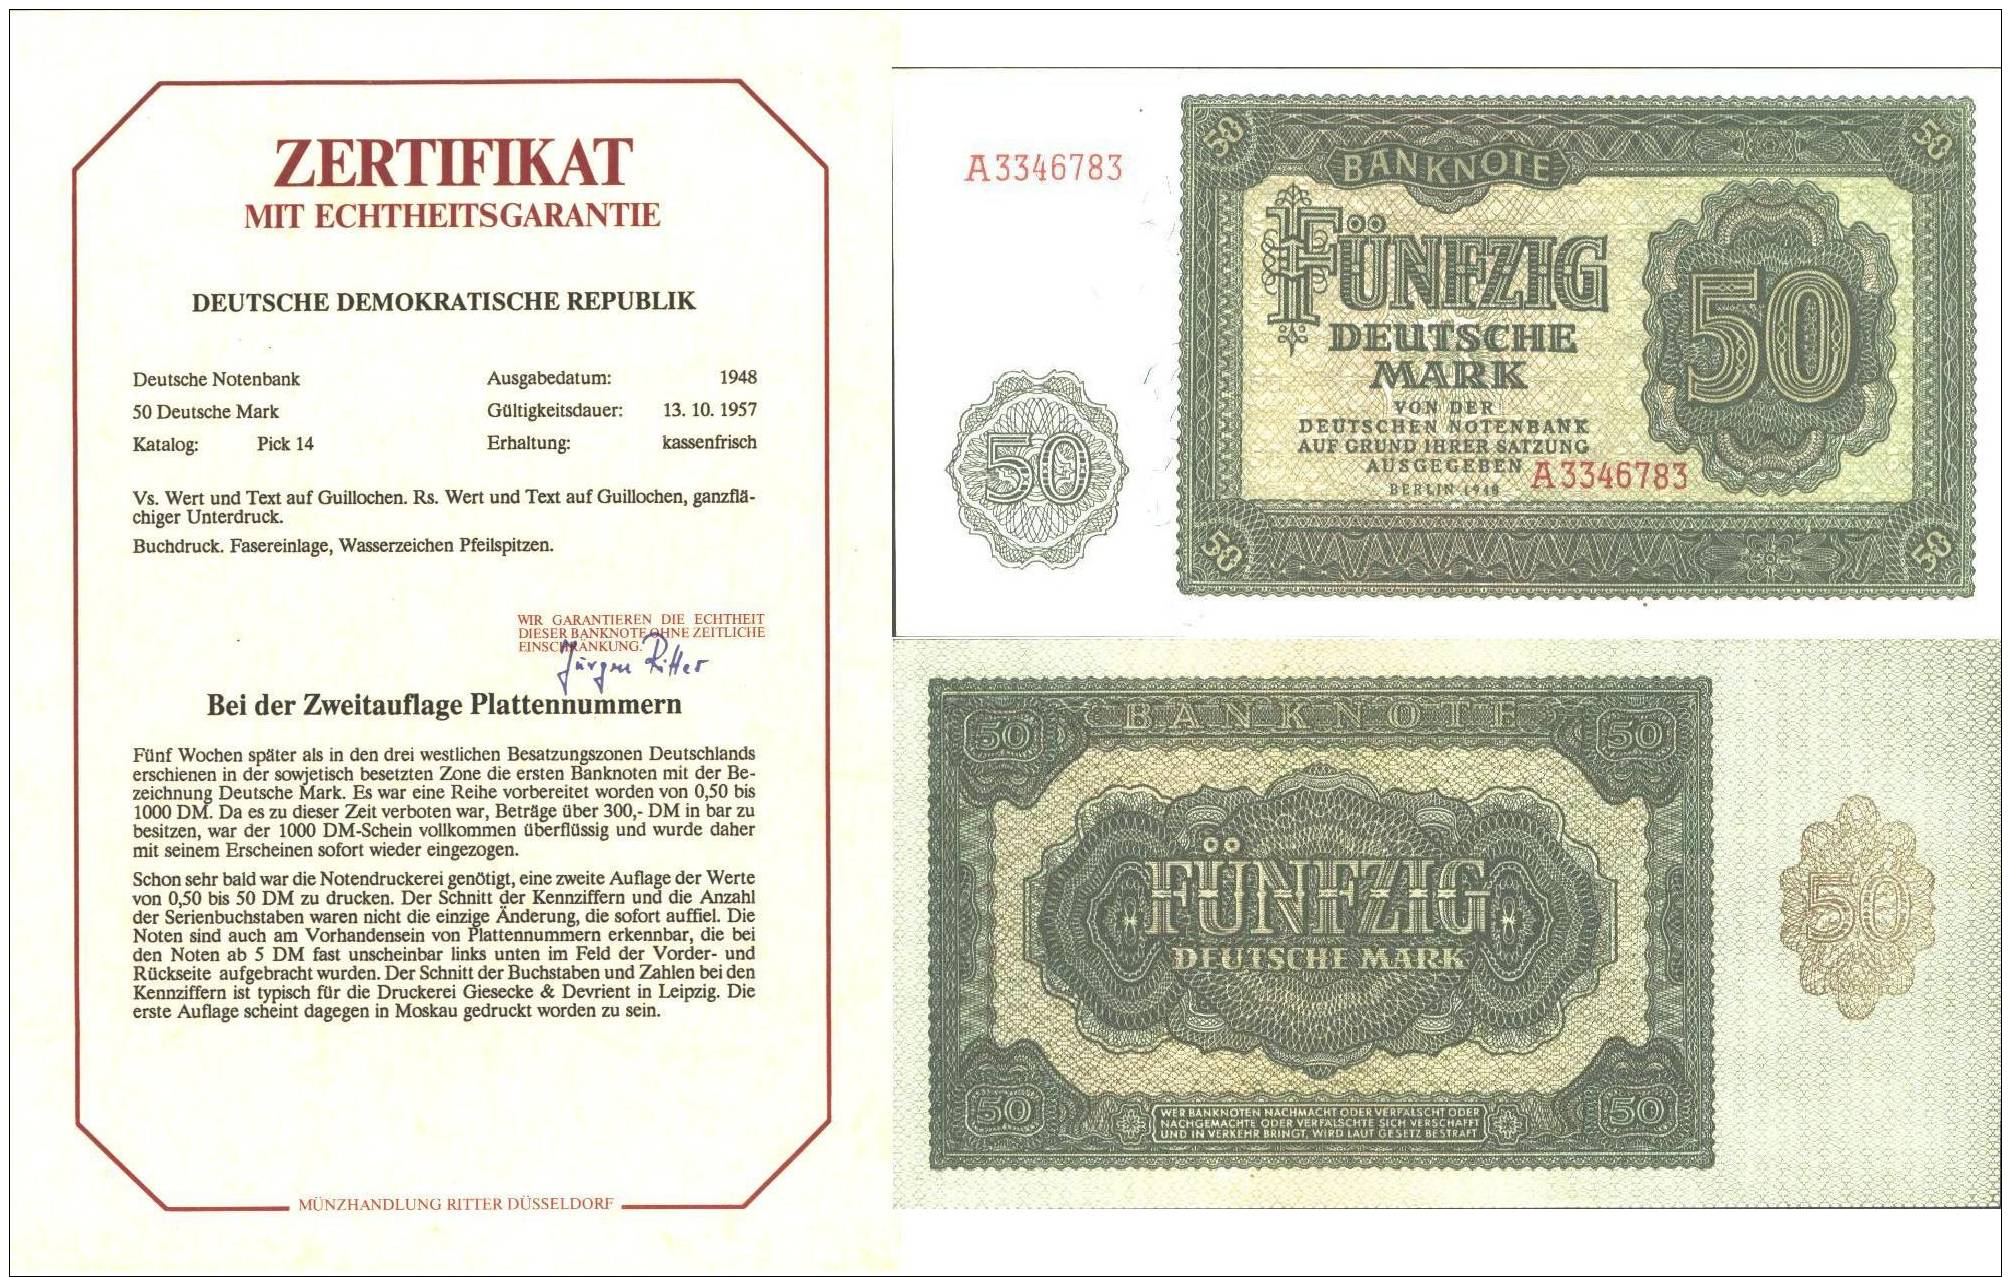 DDR - 50 Mark 1948 - Deutsche Notenbank:  - Zertifikat Münzhandlung Ritter - 50 Deutsche Mark